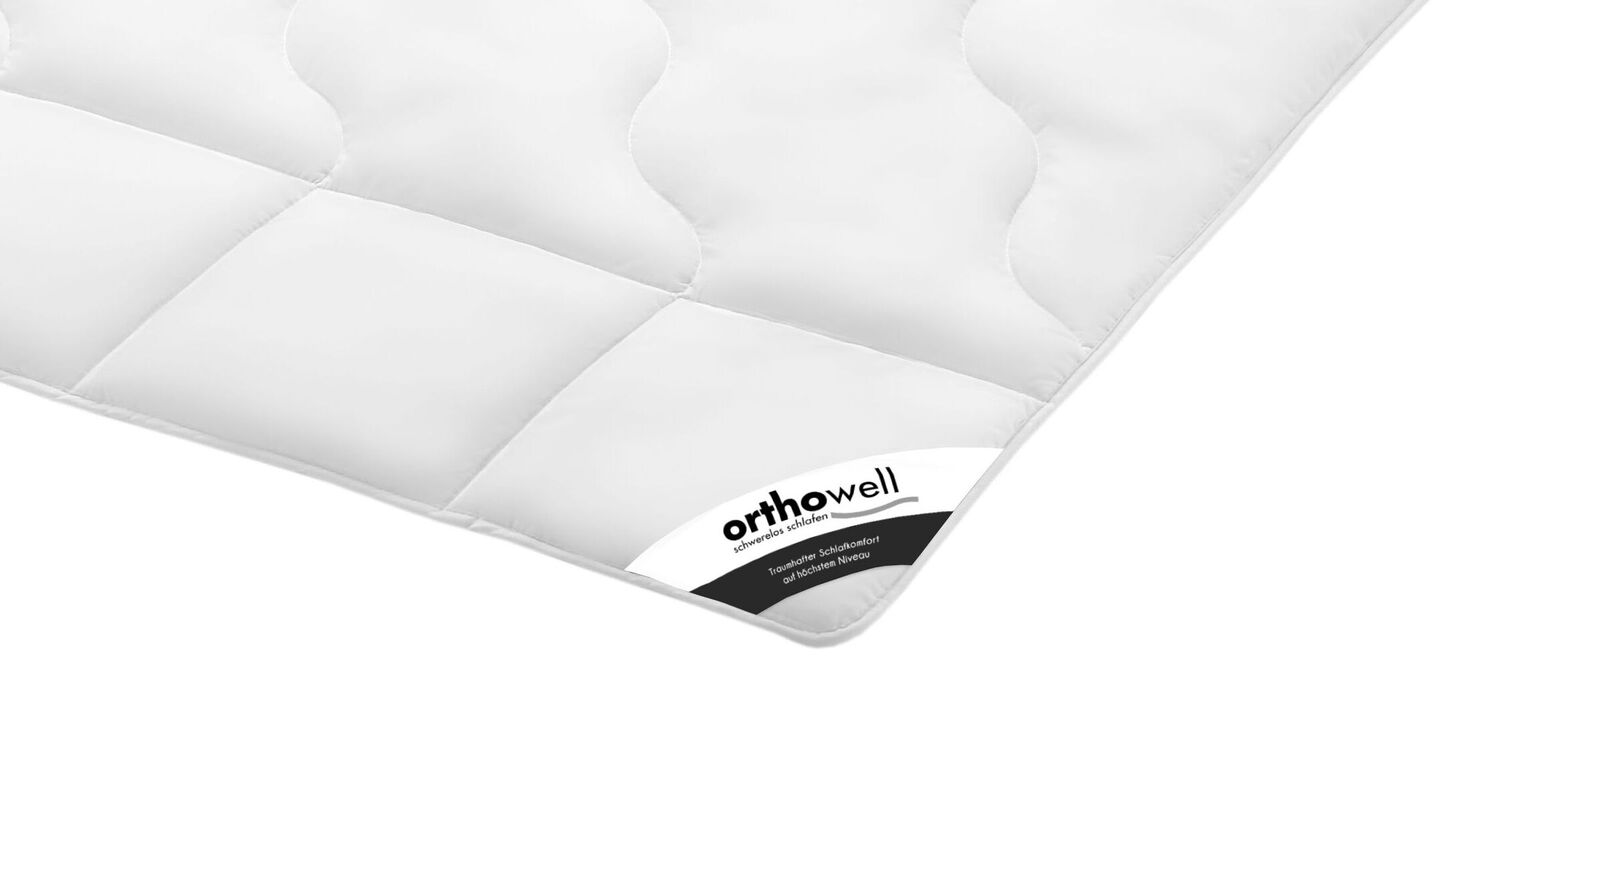 Preiswerte Faser-Bettdecke orthowell Standard warm